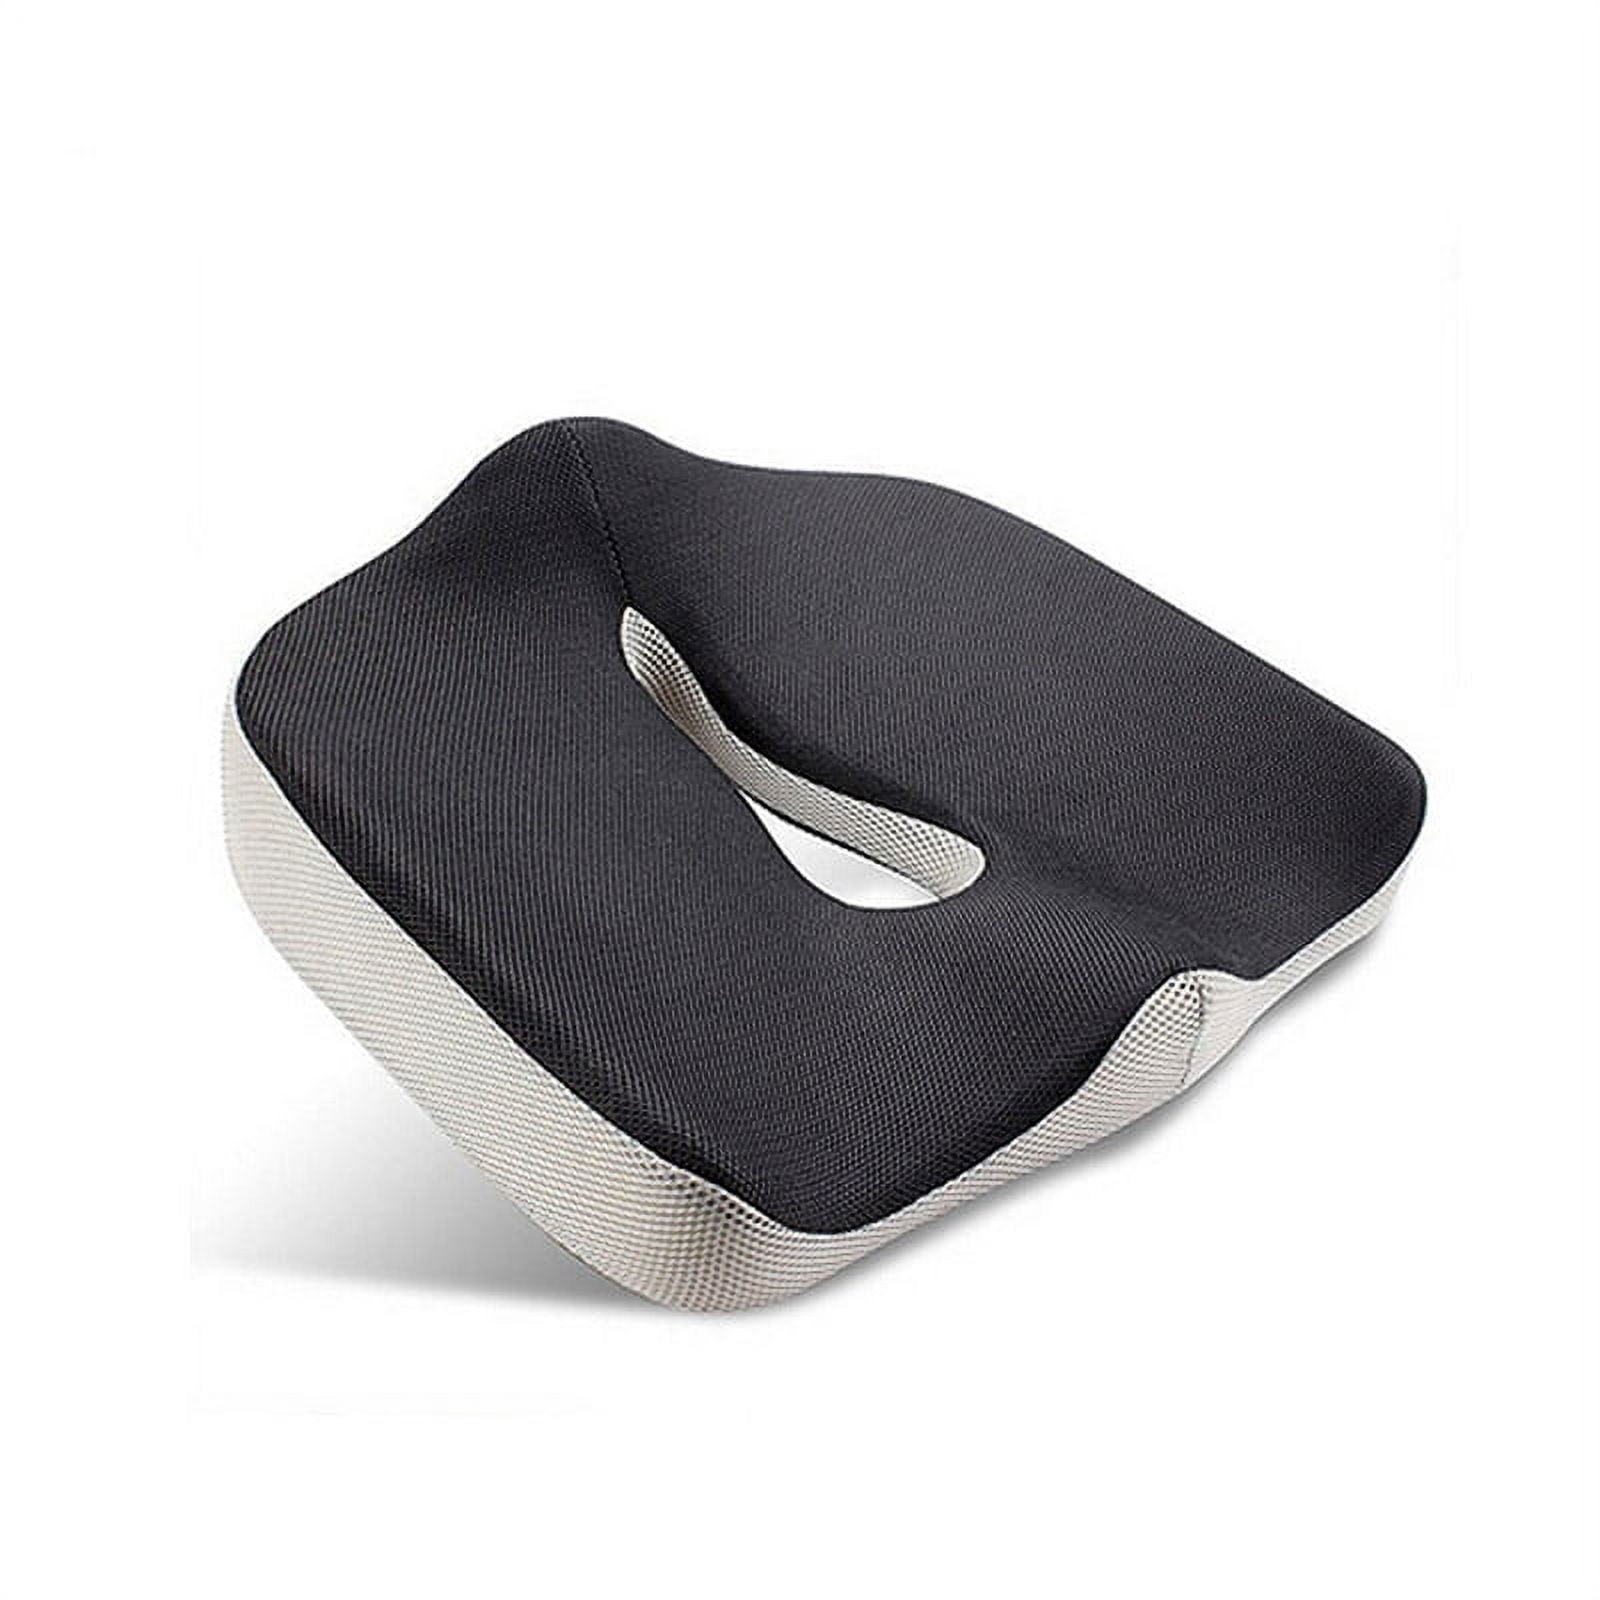 Memory Foam Seat Cushion for Backpain, Sciatica & Hemorrhoid Treatment –  JUNELILYBEAUTY